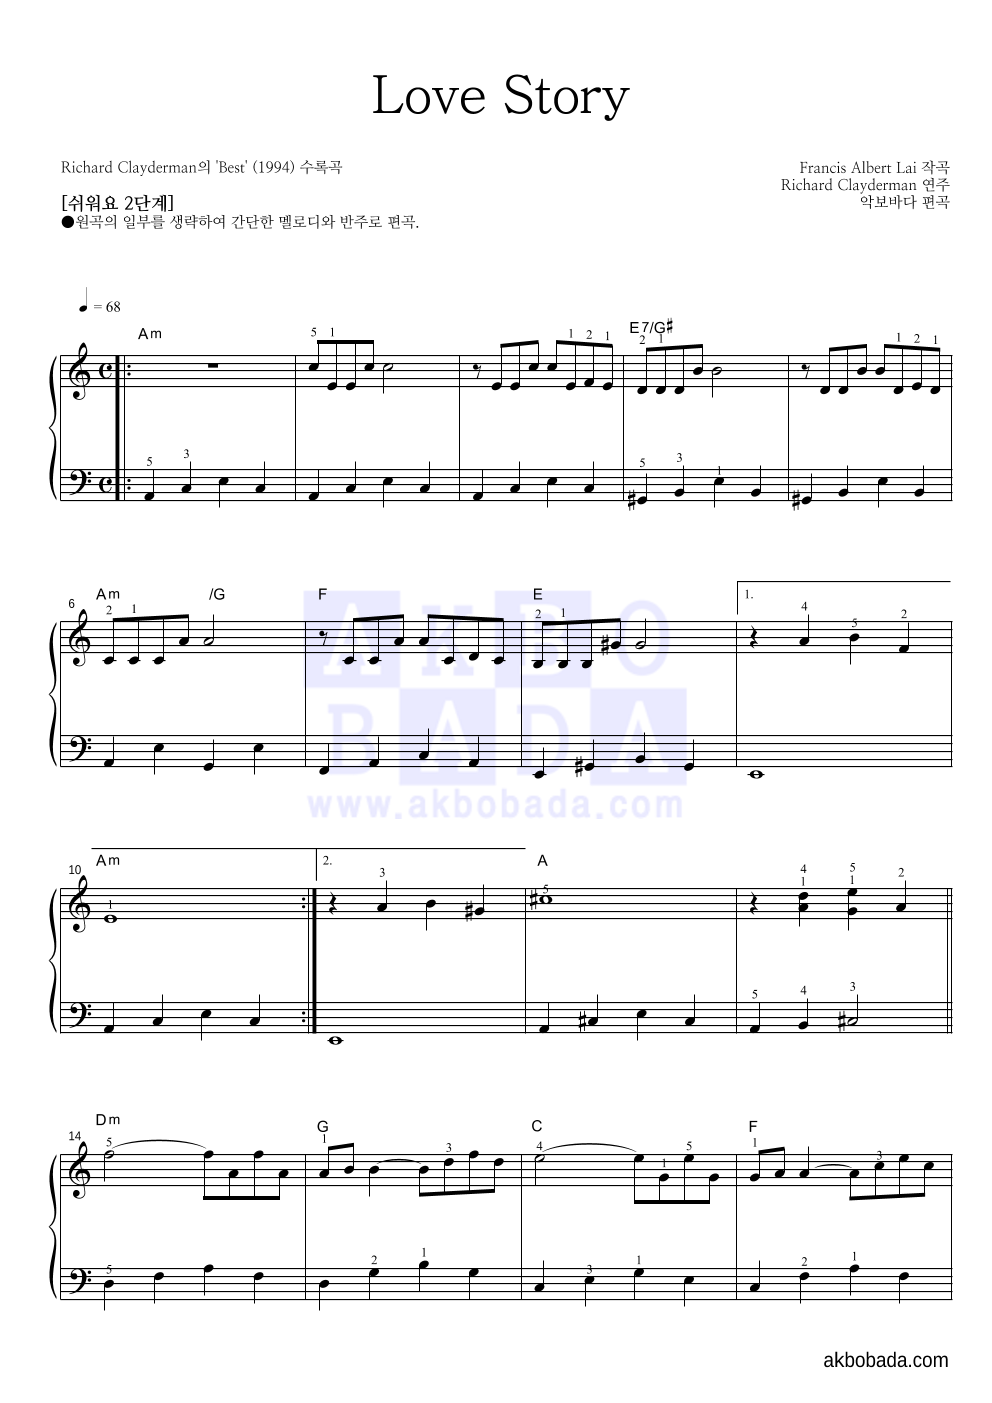 Richard Clayderman  - Love Story 피아노2단-쉬워요 악보 